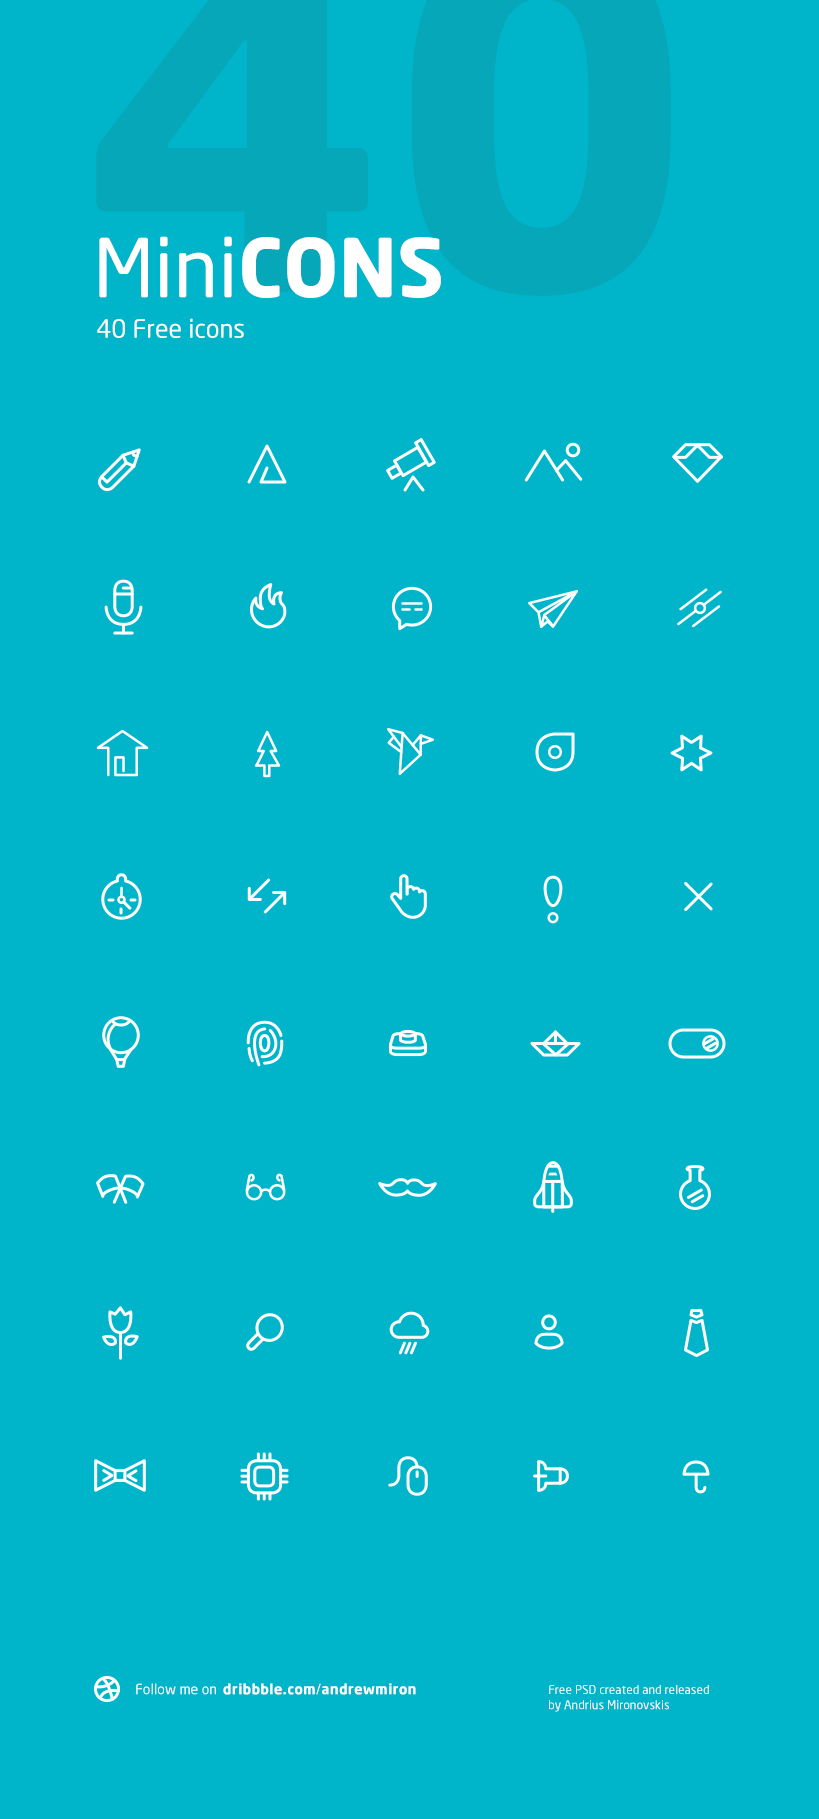 MiniCONS - Free icons PSD!